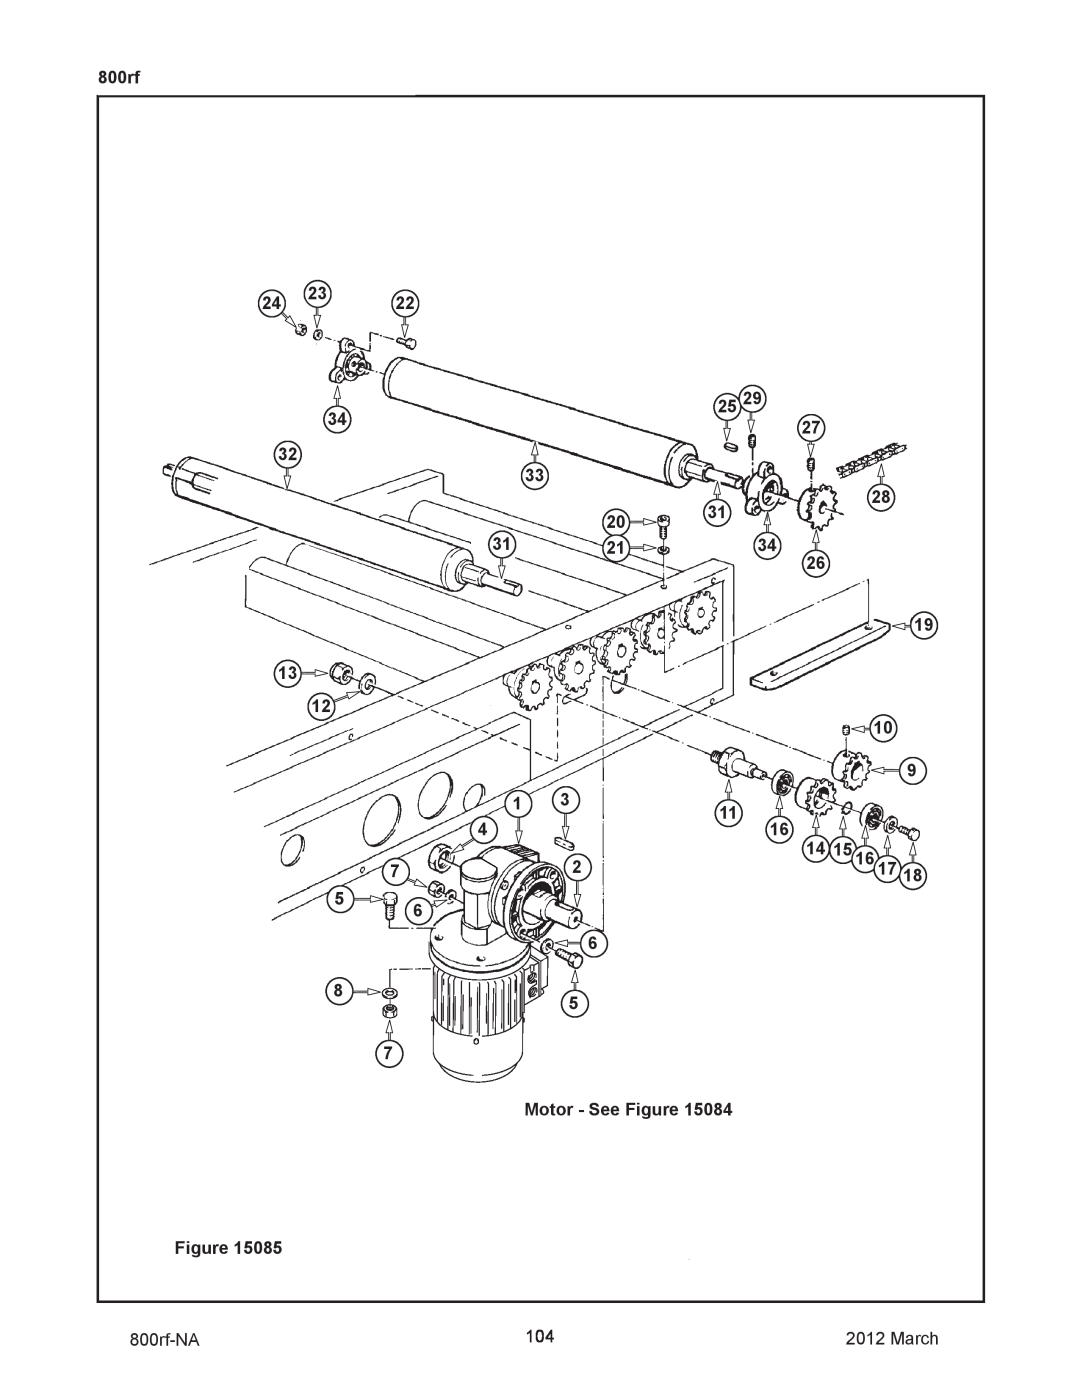 3M 40800 manual 14 15, Motor - See Figure, 800rf-NA, March 